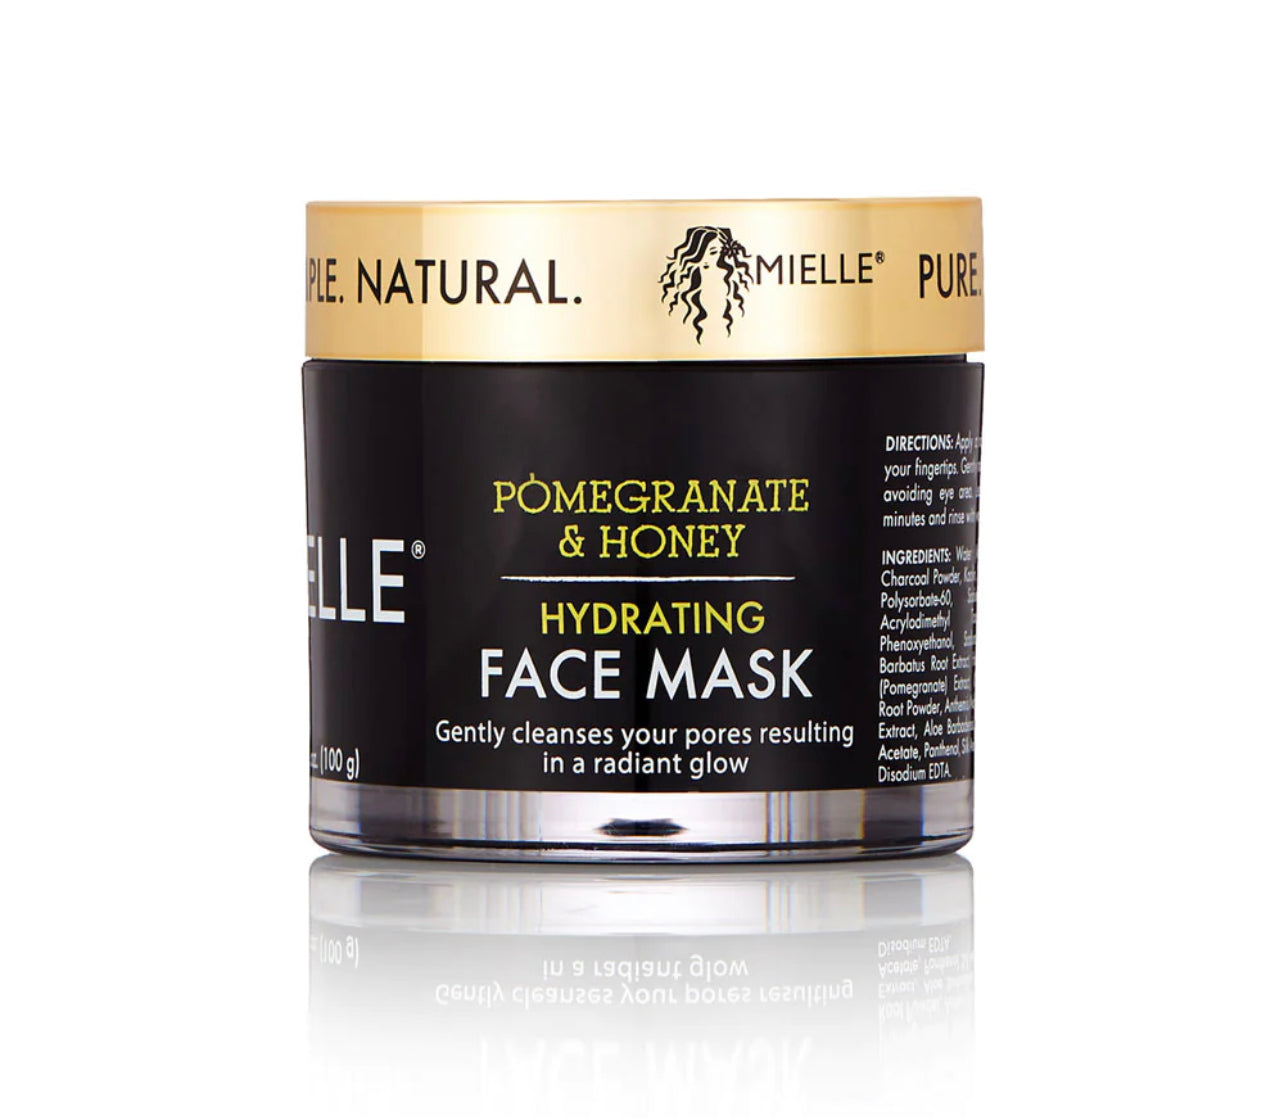 Pomegranate & Honey Hydrating Face Mask